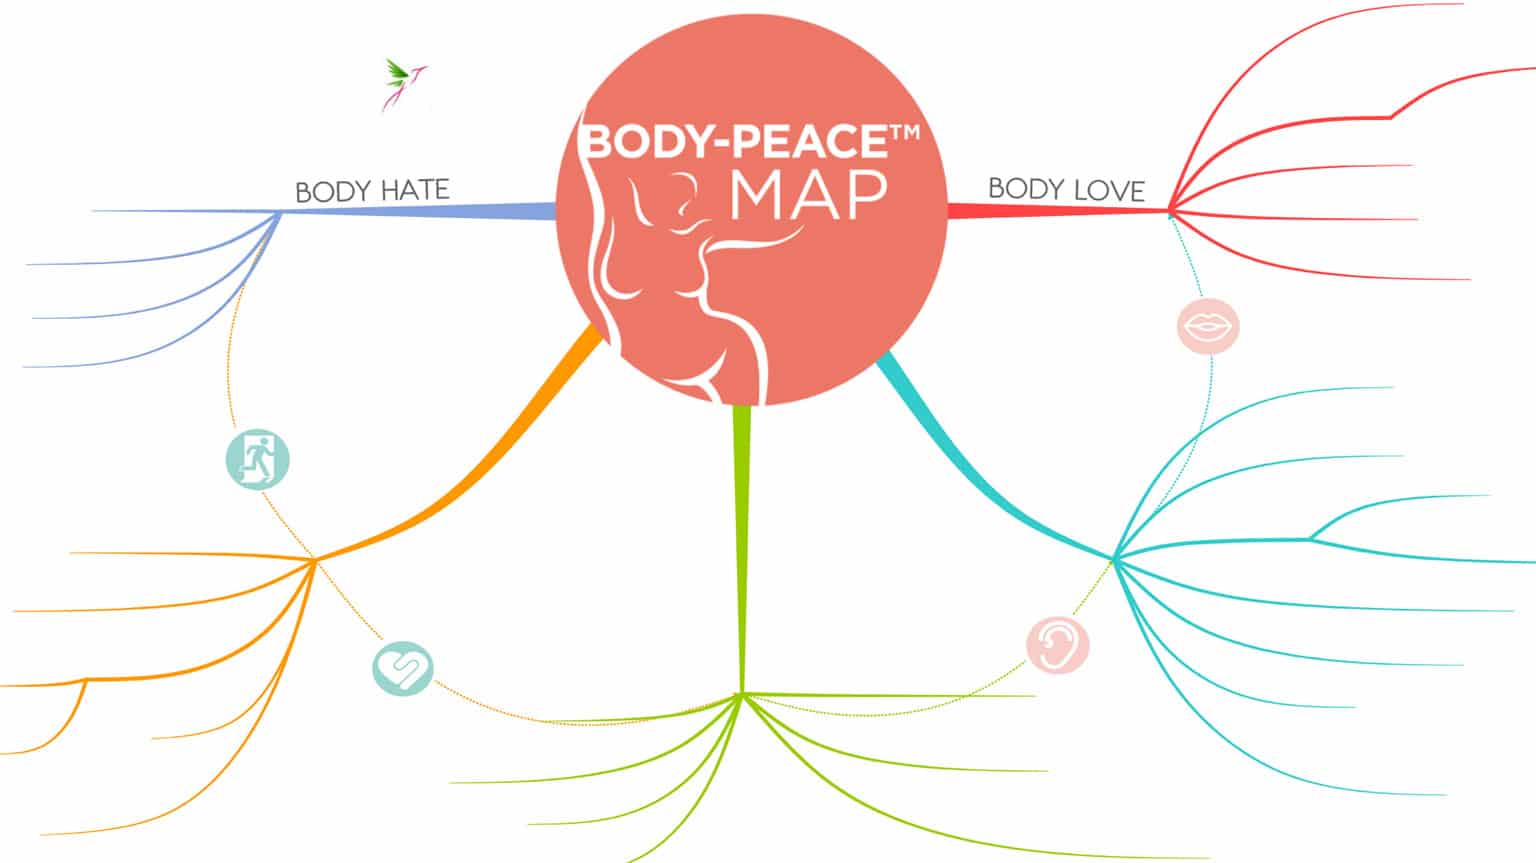 Body-Peace Map